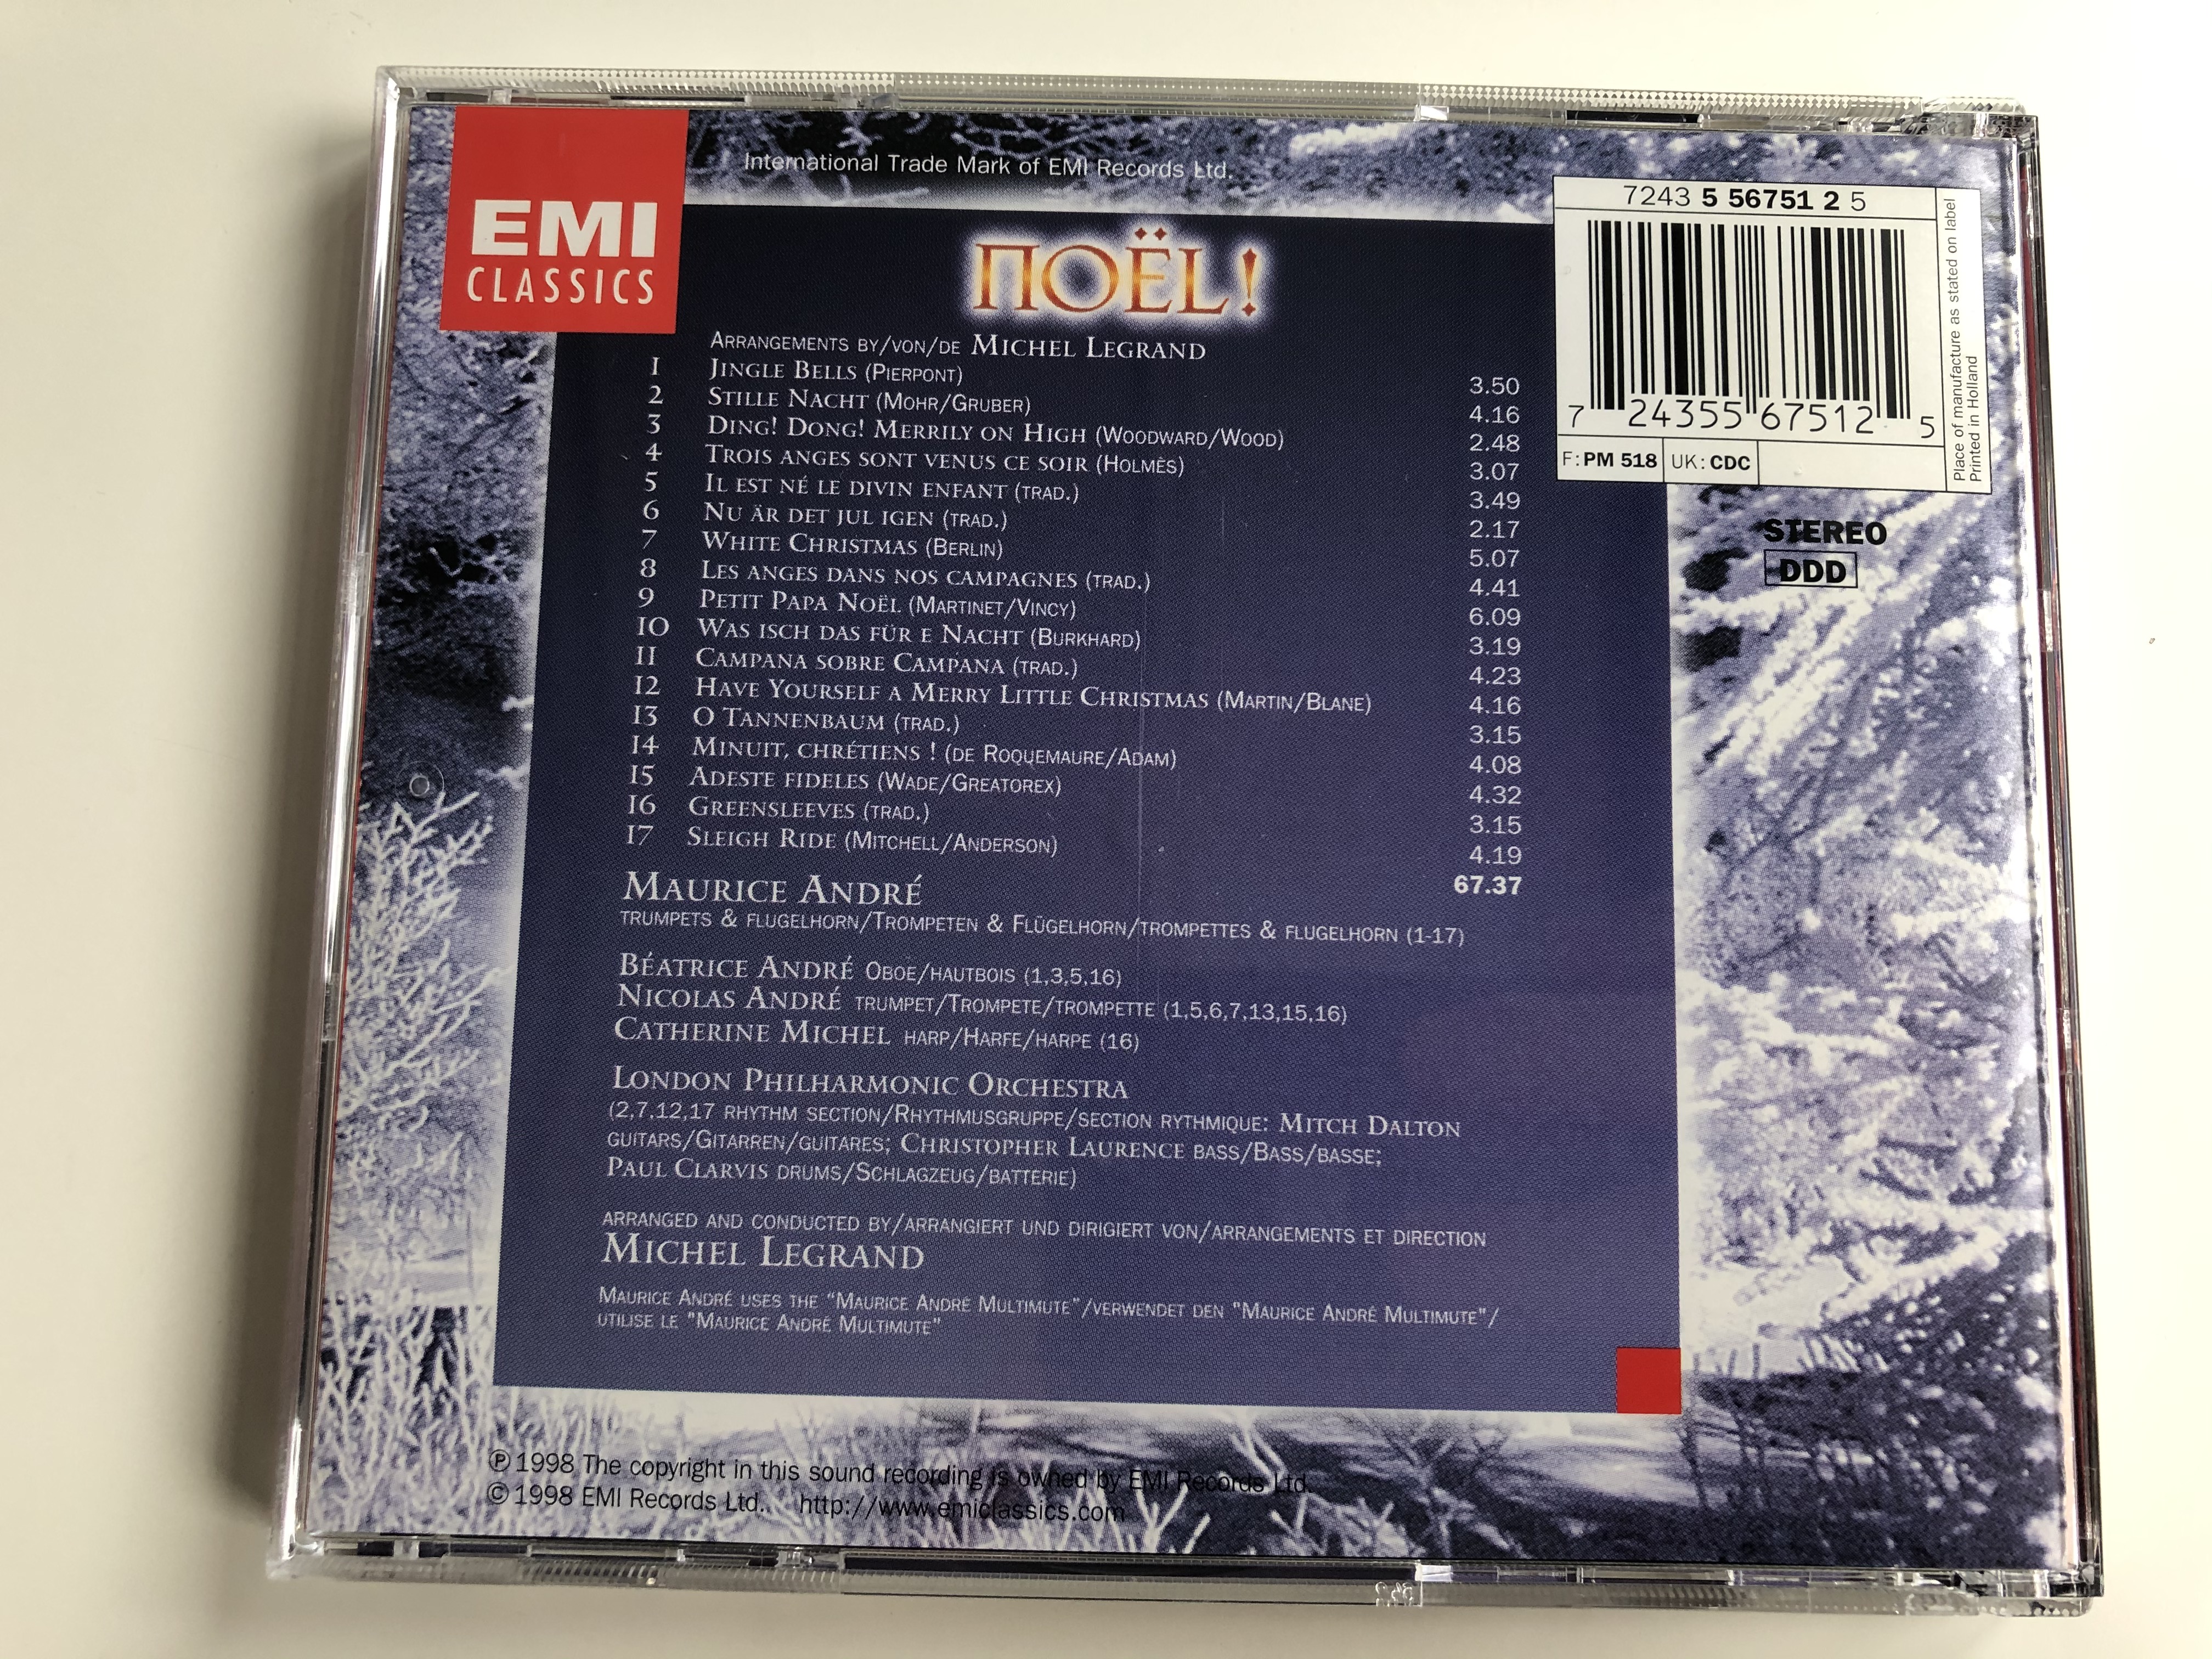 noel-maurice-andr-michel-legrand-beatrice-andre-nicolas-andre-catherine-michel-london-philharmonic-orchestra-emi-classics-audio-cd-1998-stereo-5-56751-2-7-.jpg